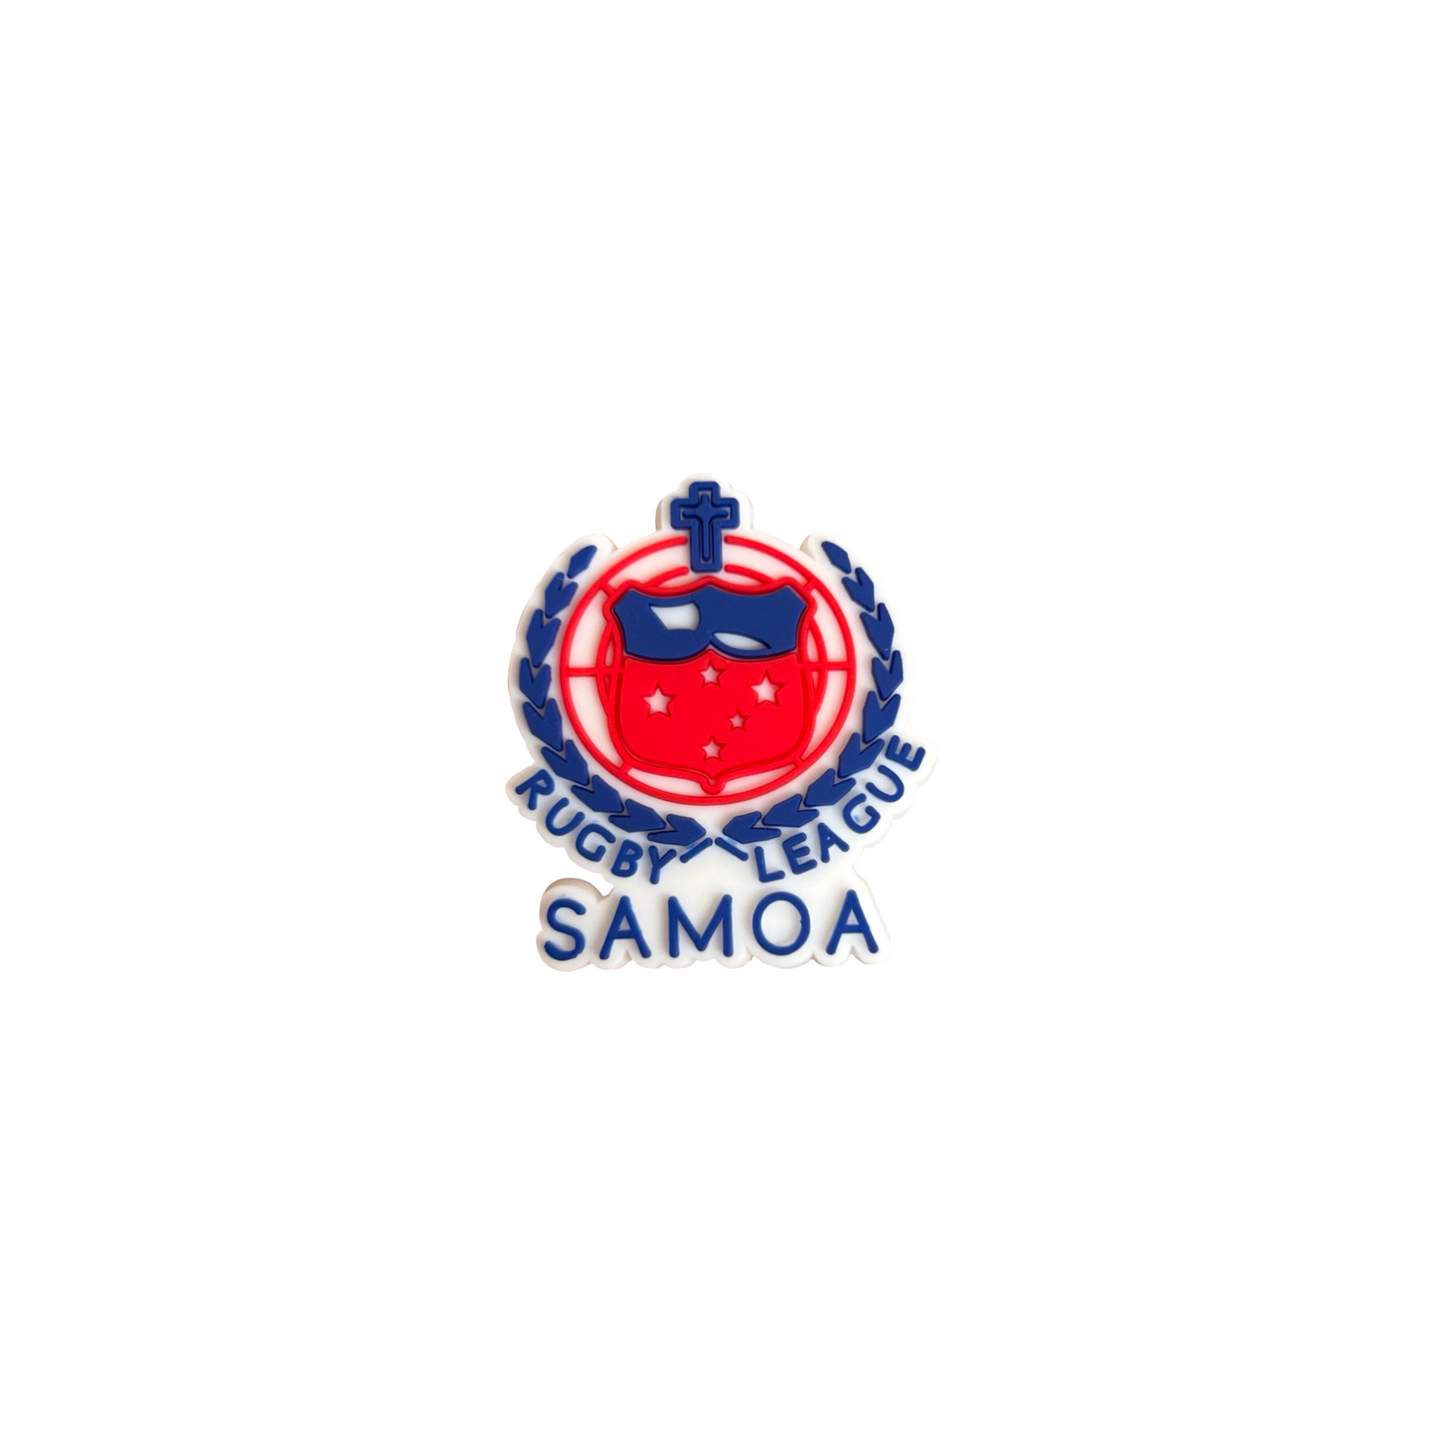 Samoa Rugby League